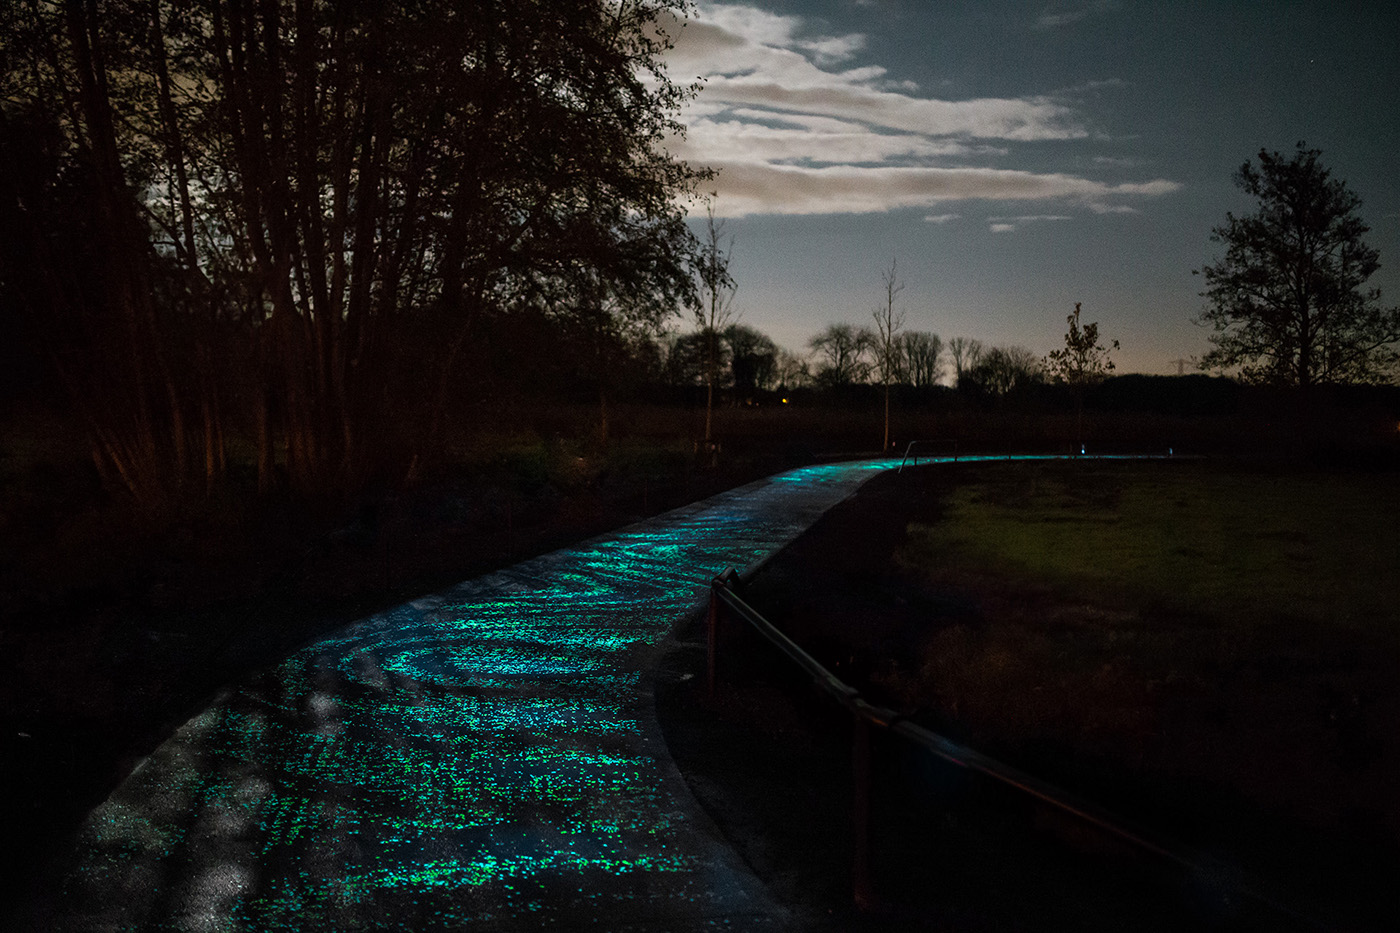 van gogh Gogh studio roosegaarde bike lane glowing path Bike Cycling night nighttime lights